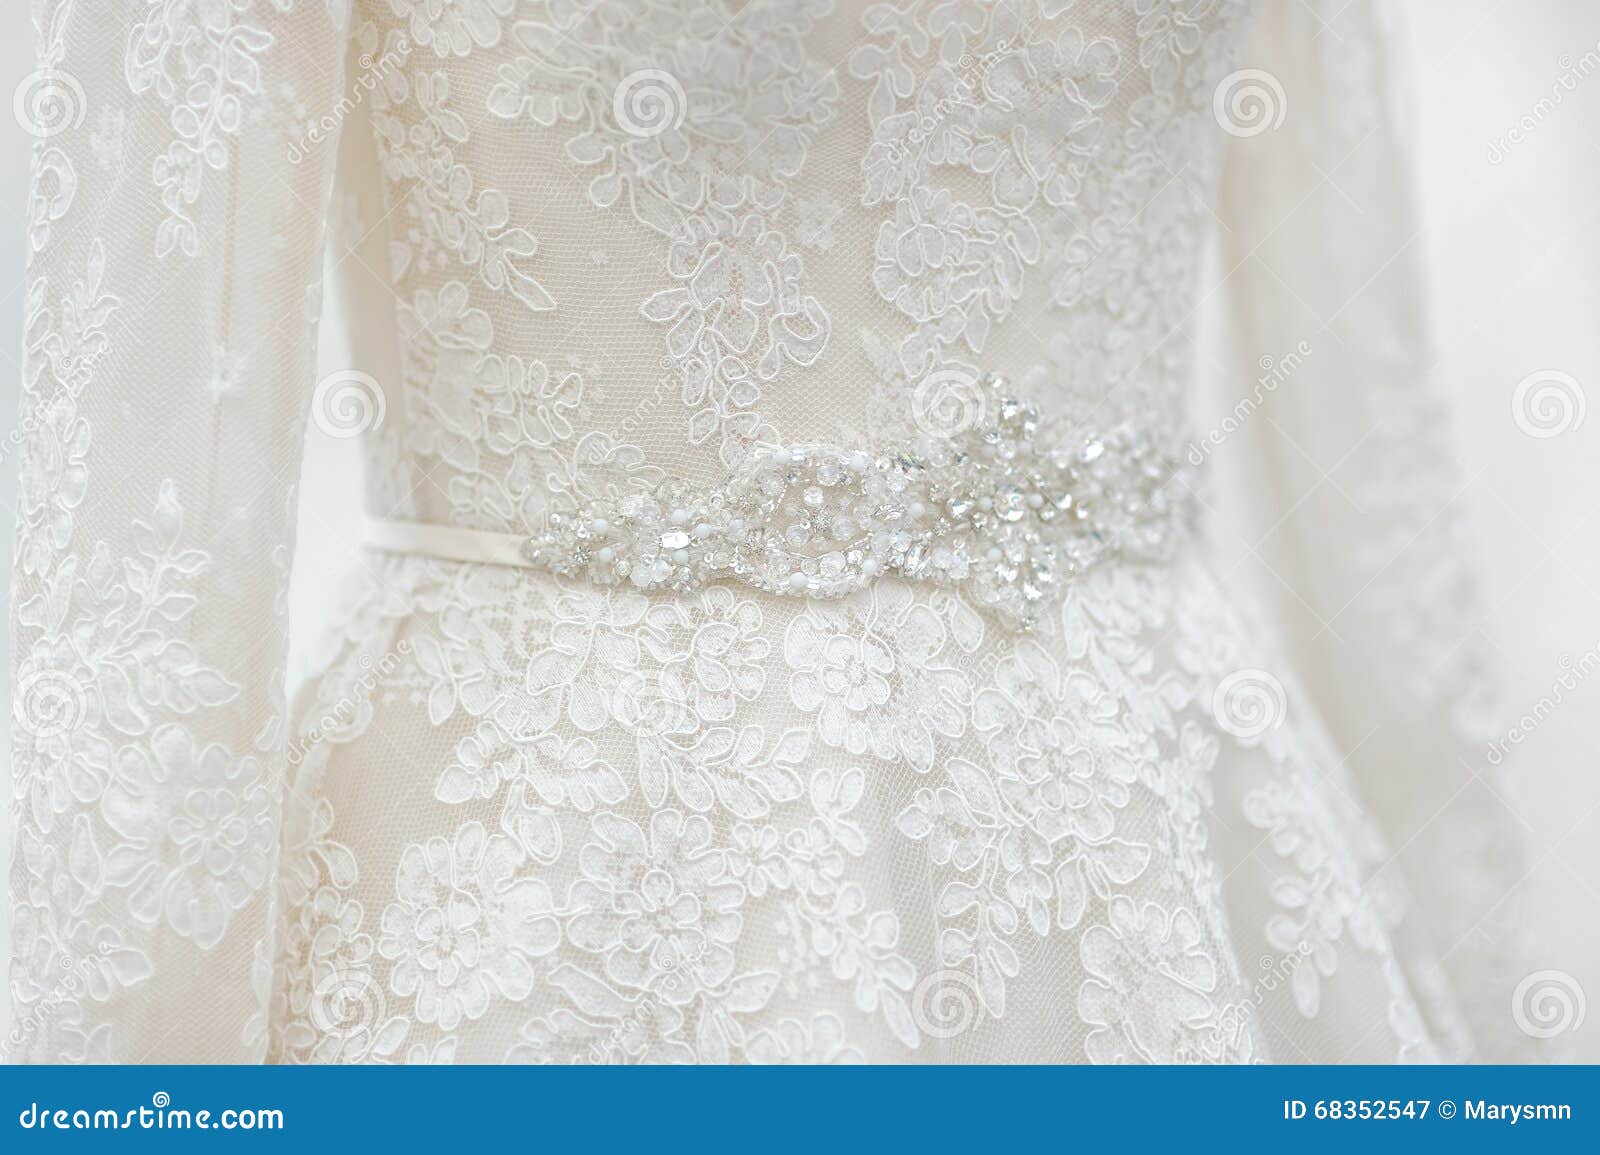 Wedding dress close up stock image. Image of ceremony - 68352547